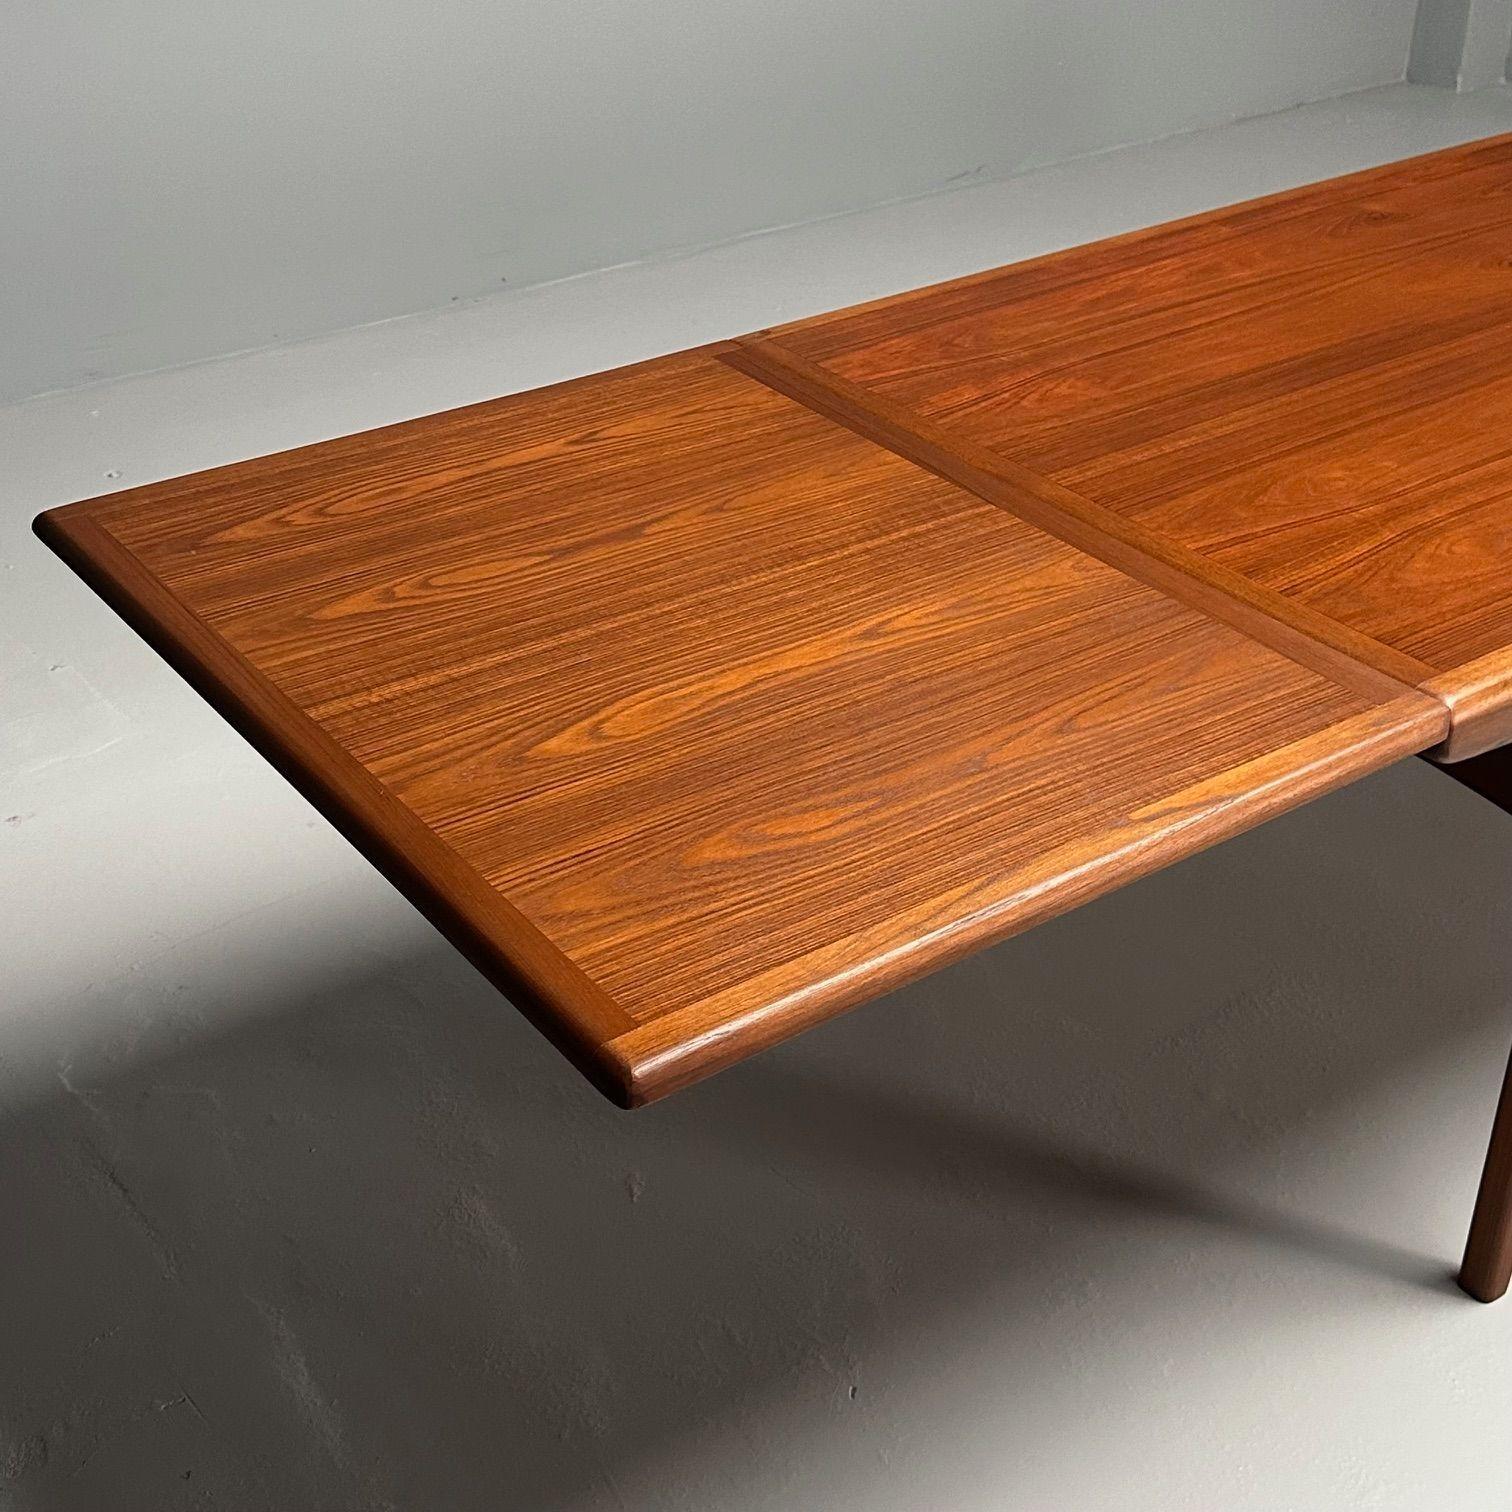 Wood Johannes Andersen, Danish Mid-Century Modern, Dining Table, Teak, Denmark, 1960s For Sale